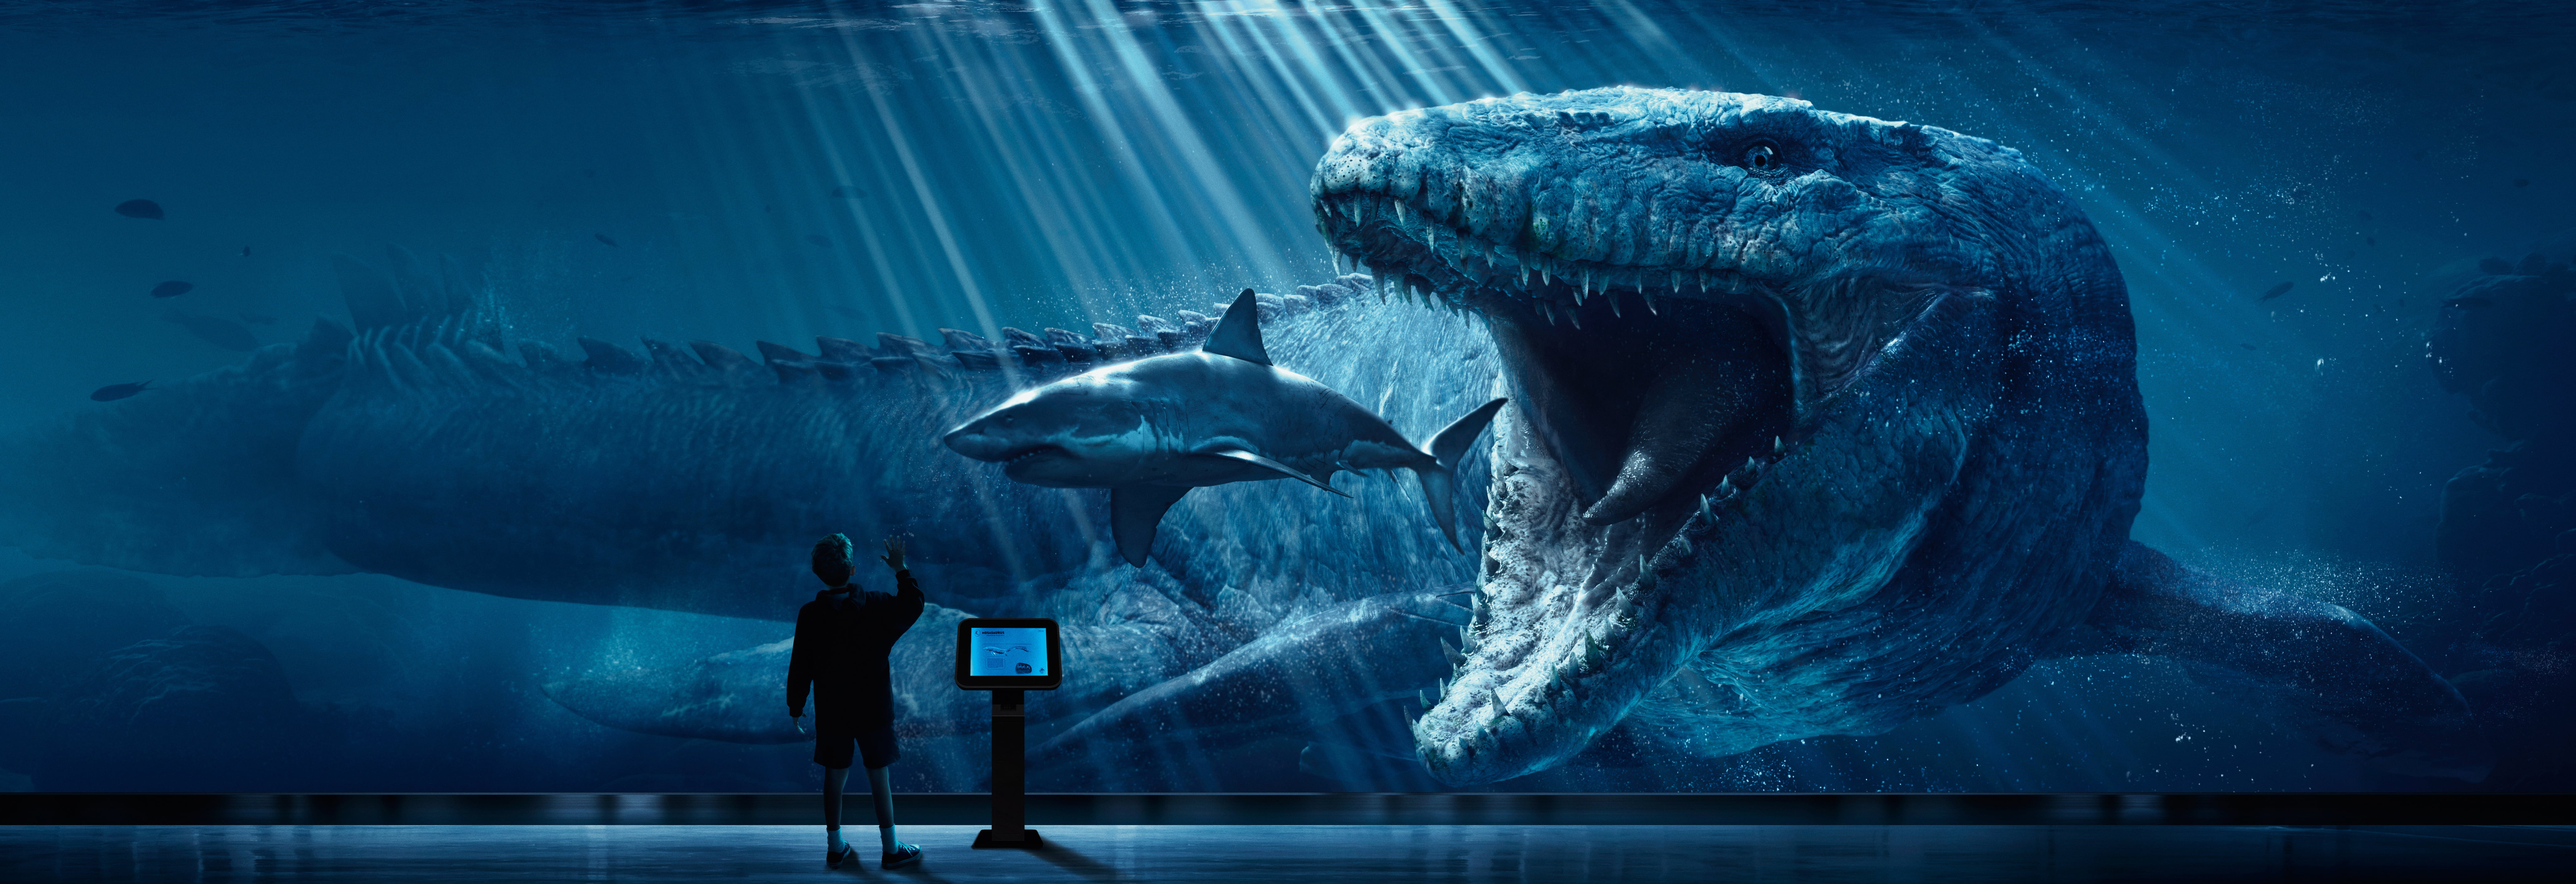 Movie Jurassic World 4k Ultra HD Wallpaper